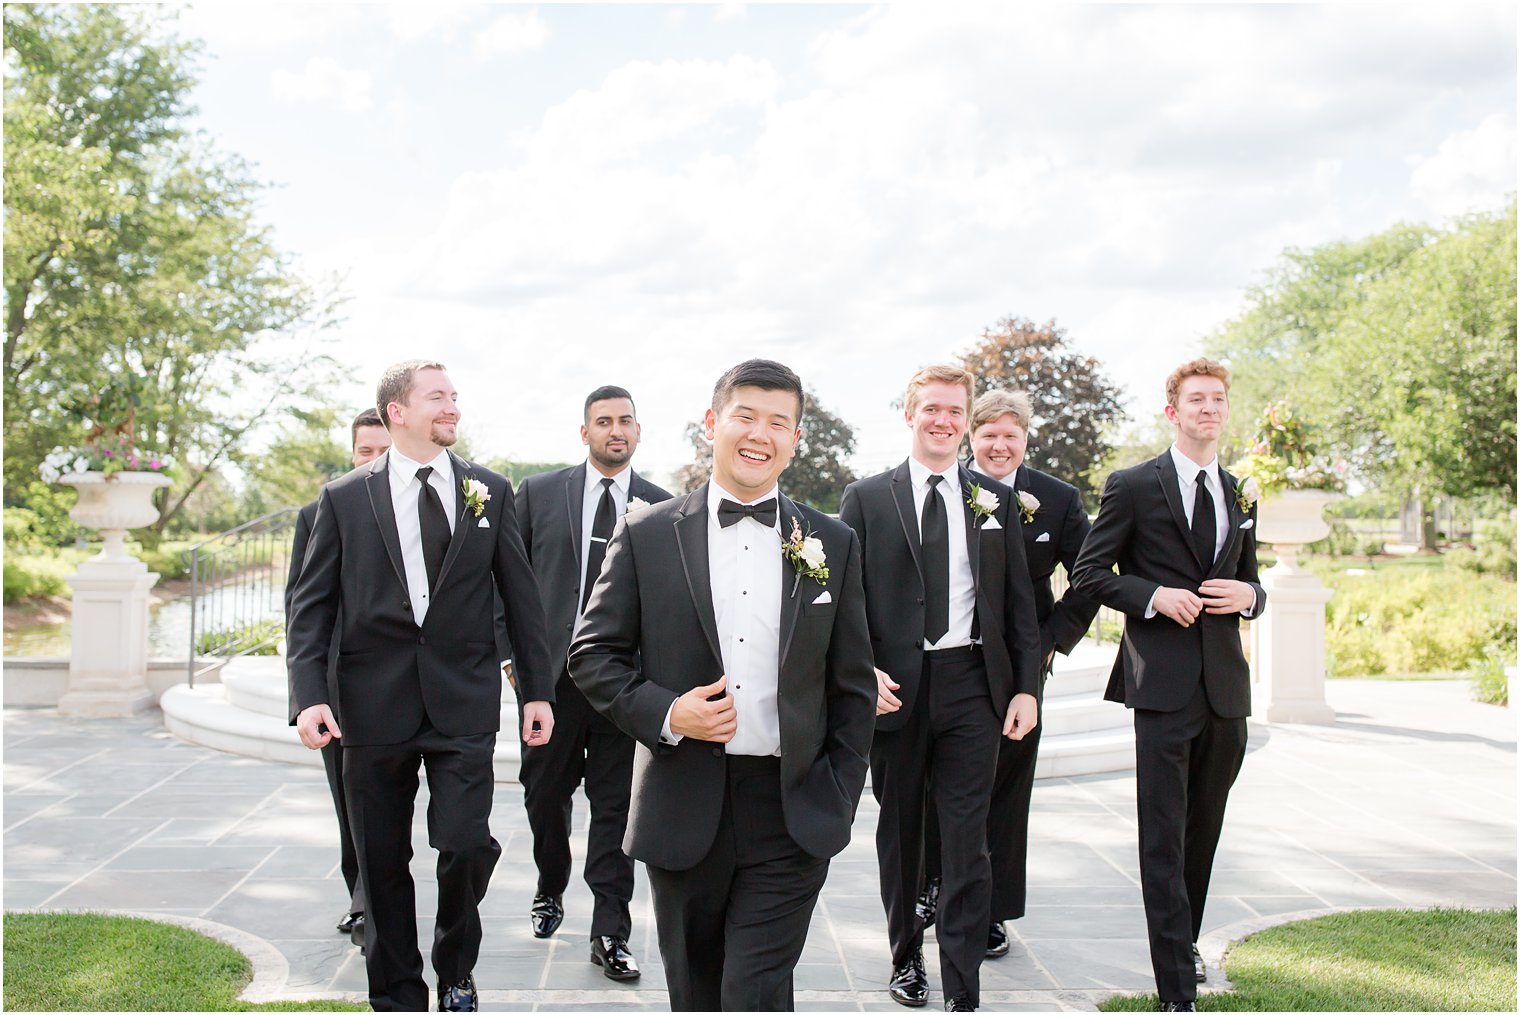 Candid photo of groom walking with groomsmen